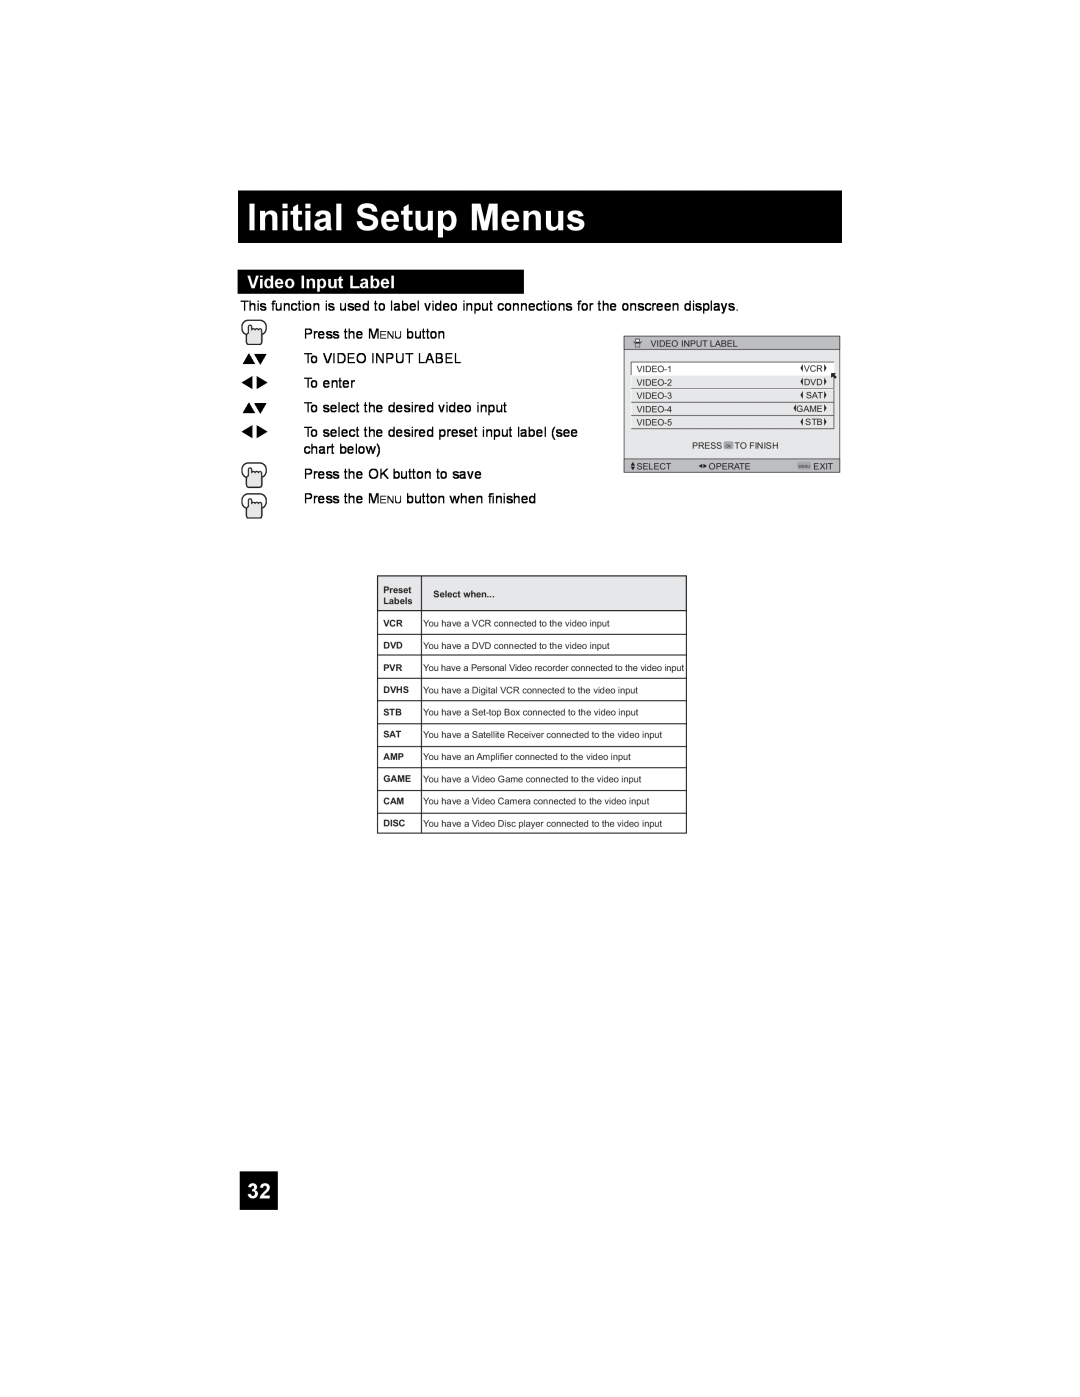 JVC LT-42X898, LT-37X898 manual Video Input Label, Initial Setup Menus, To select the desired preset input label see 